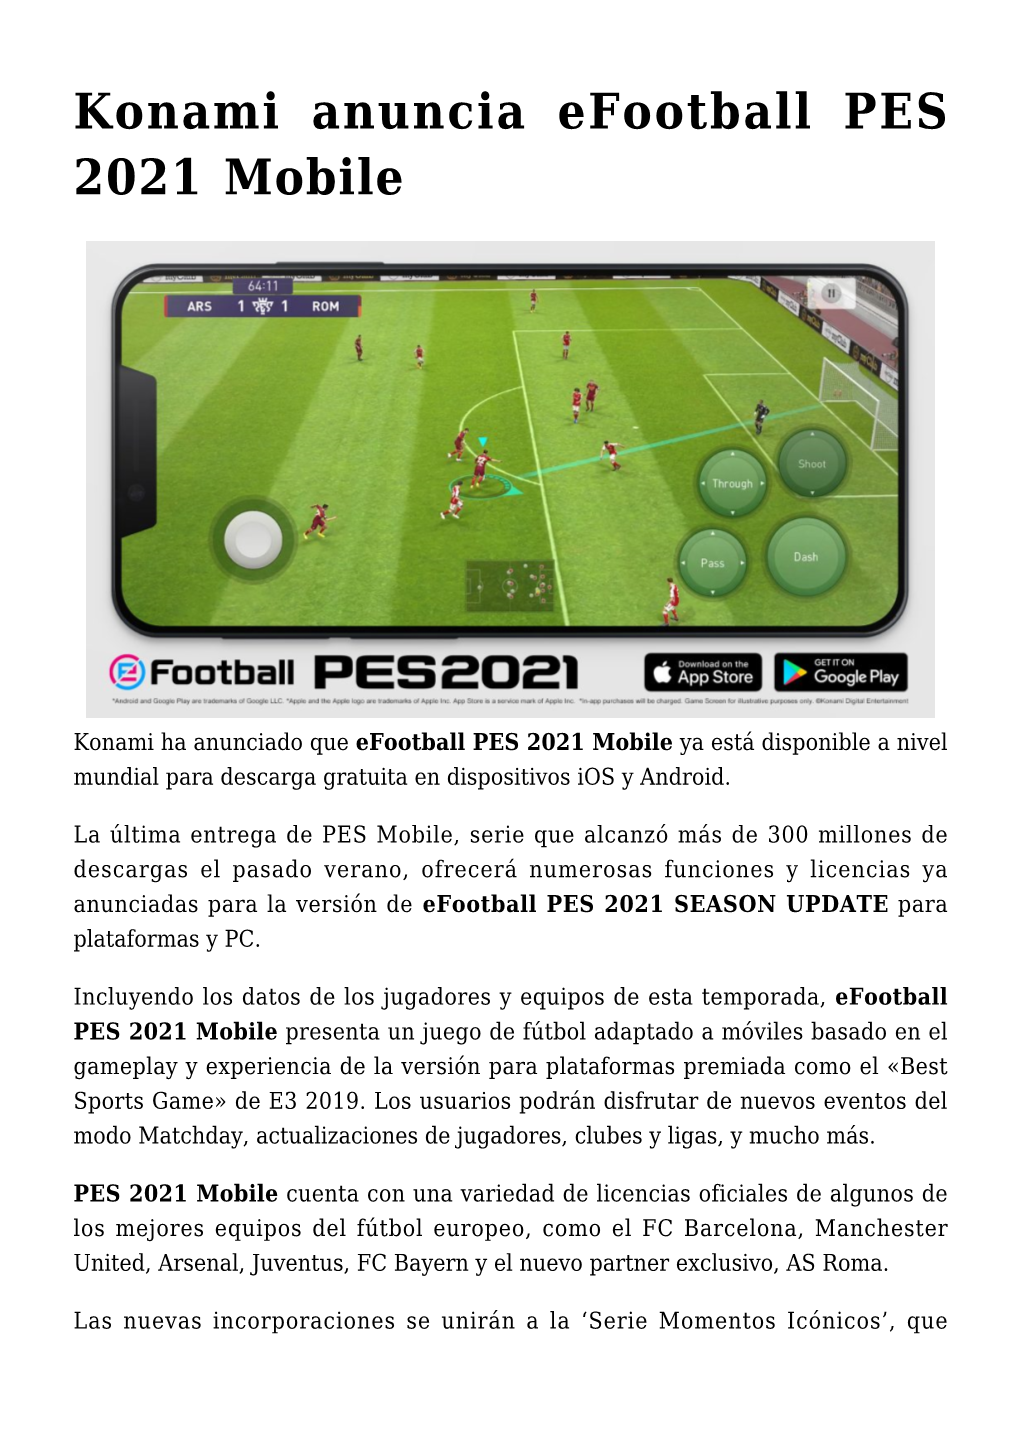 Konami Anuncia Efootball PES 2021 Mobile